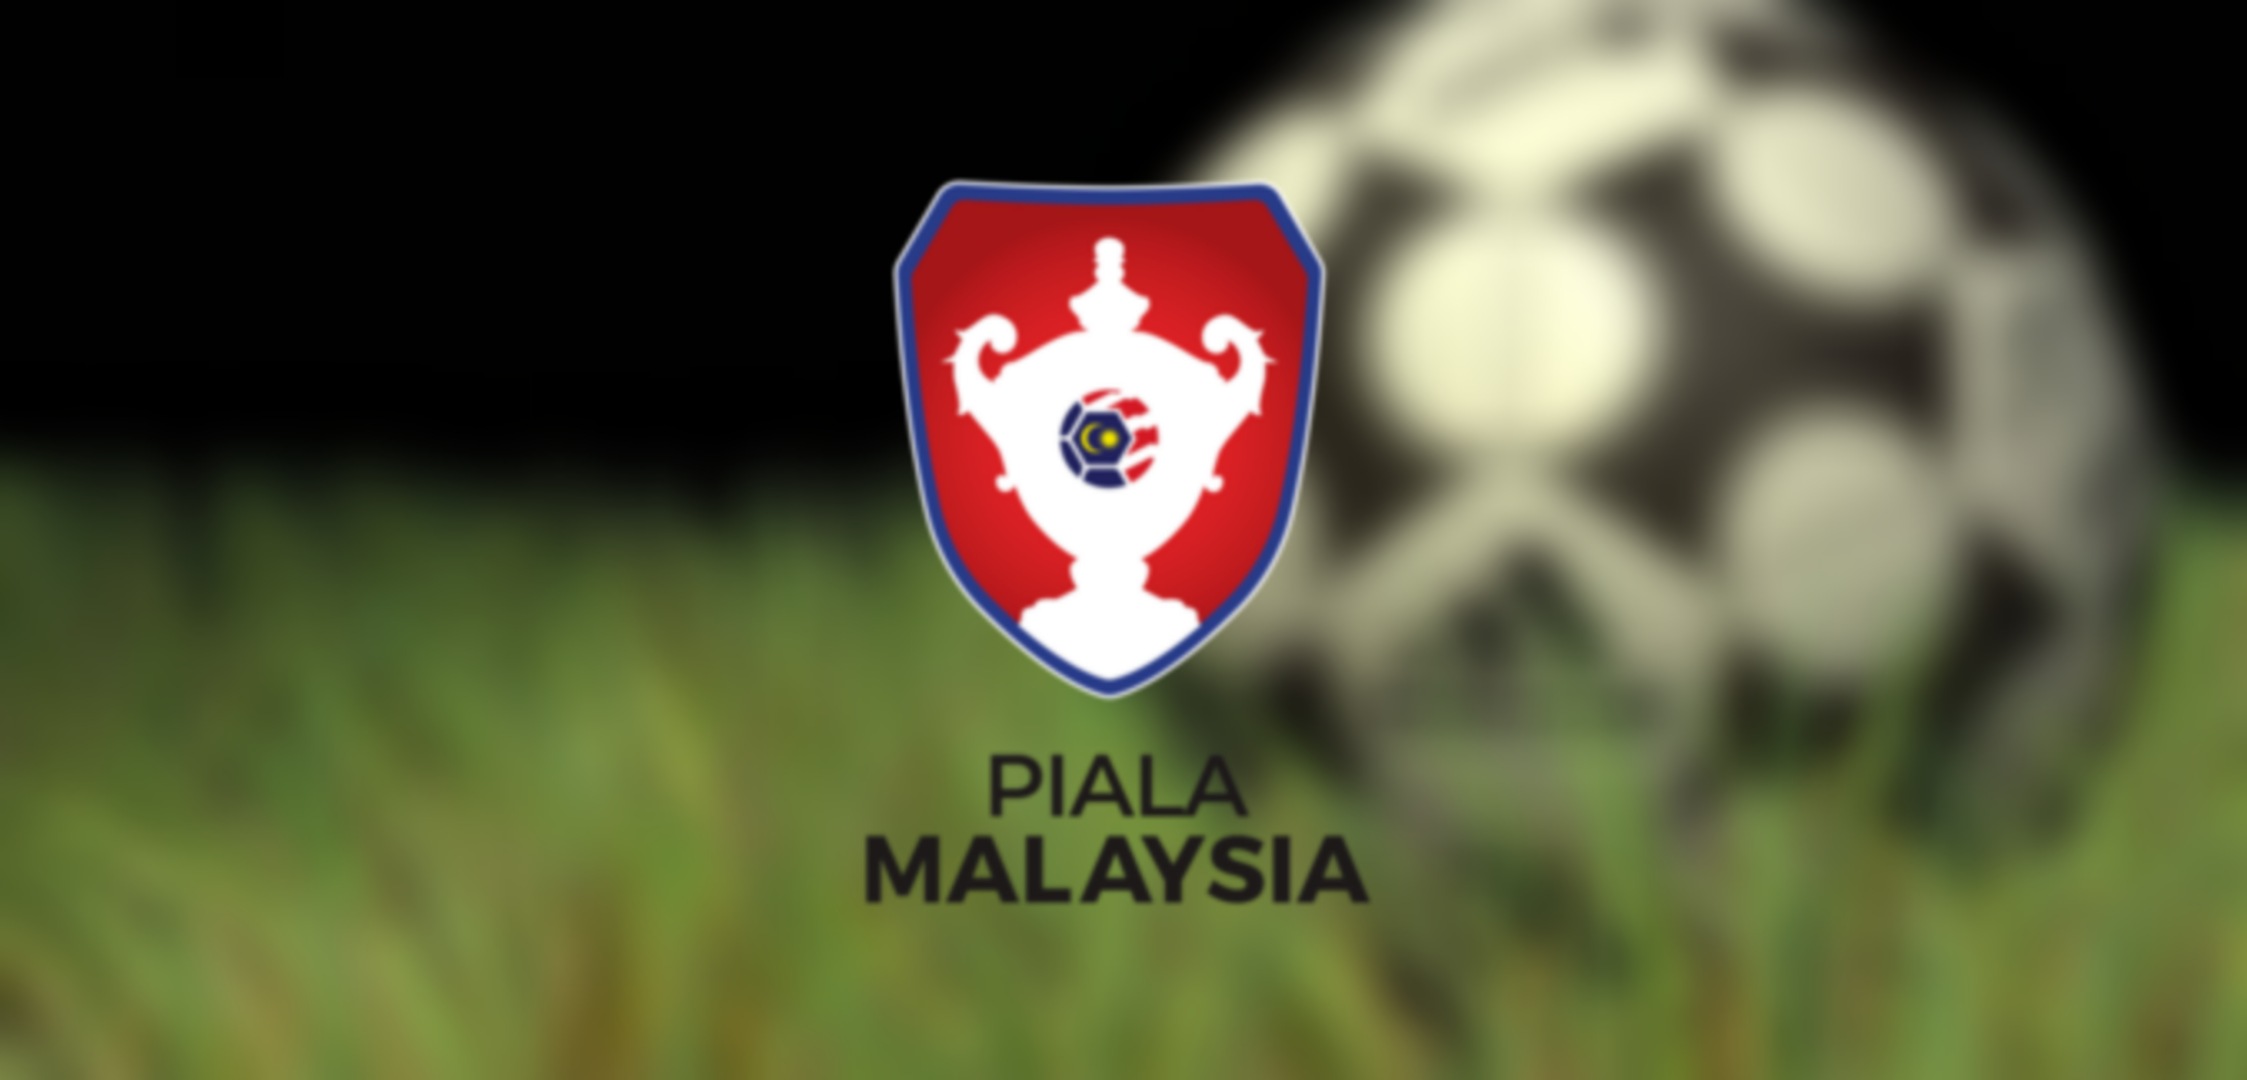 Piala 2021 tm jadual malaysia